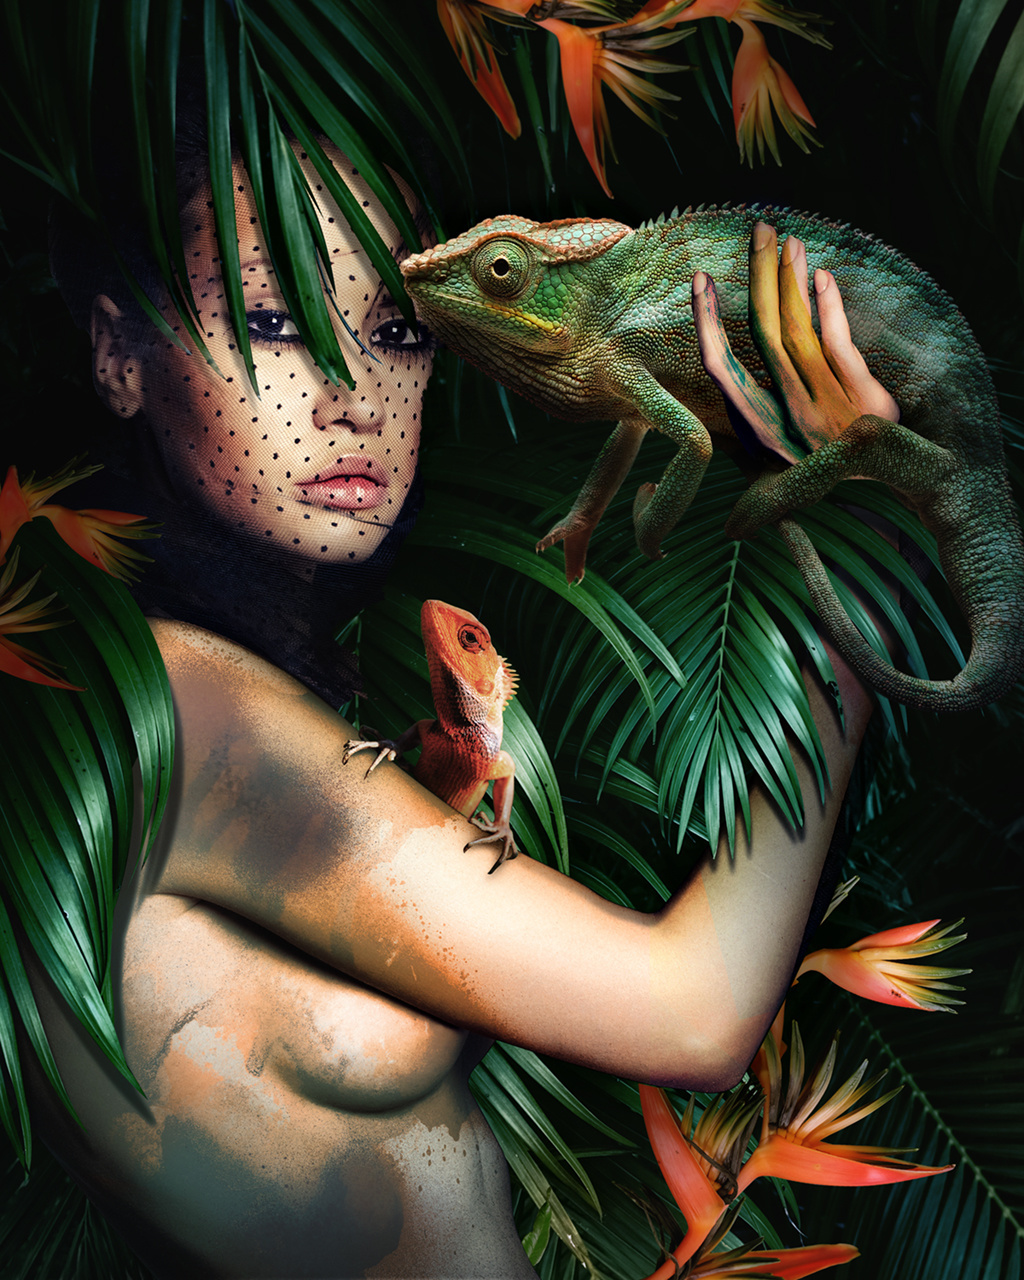 Her nature - Lizard